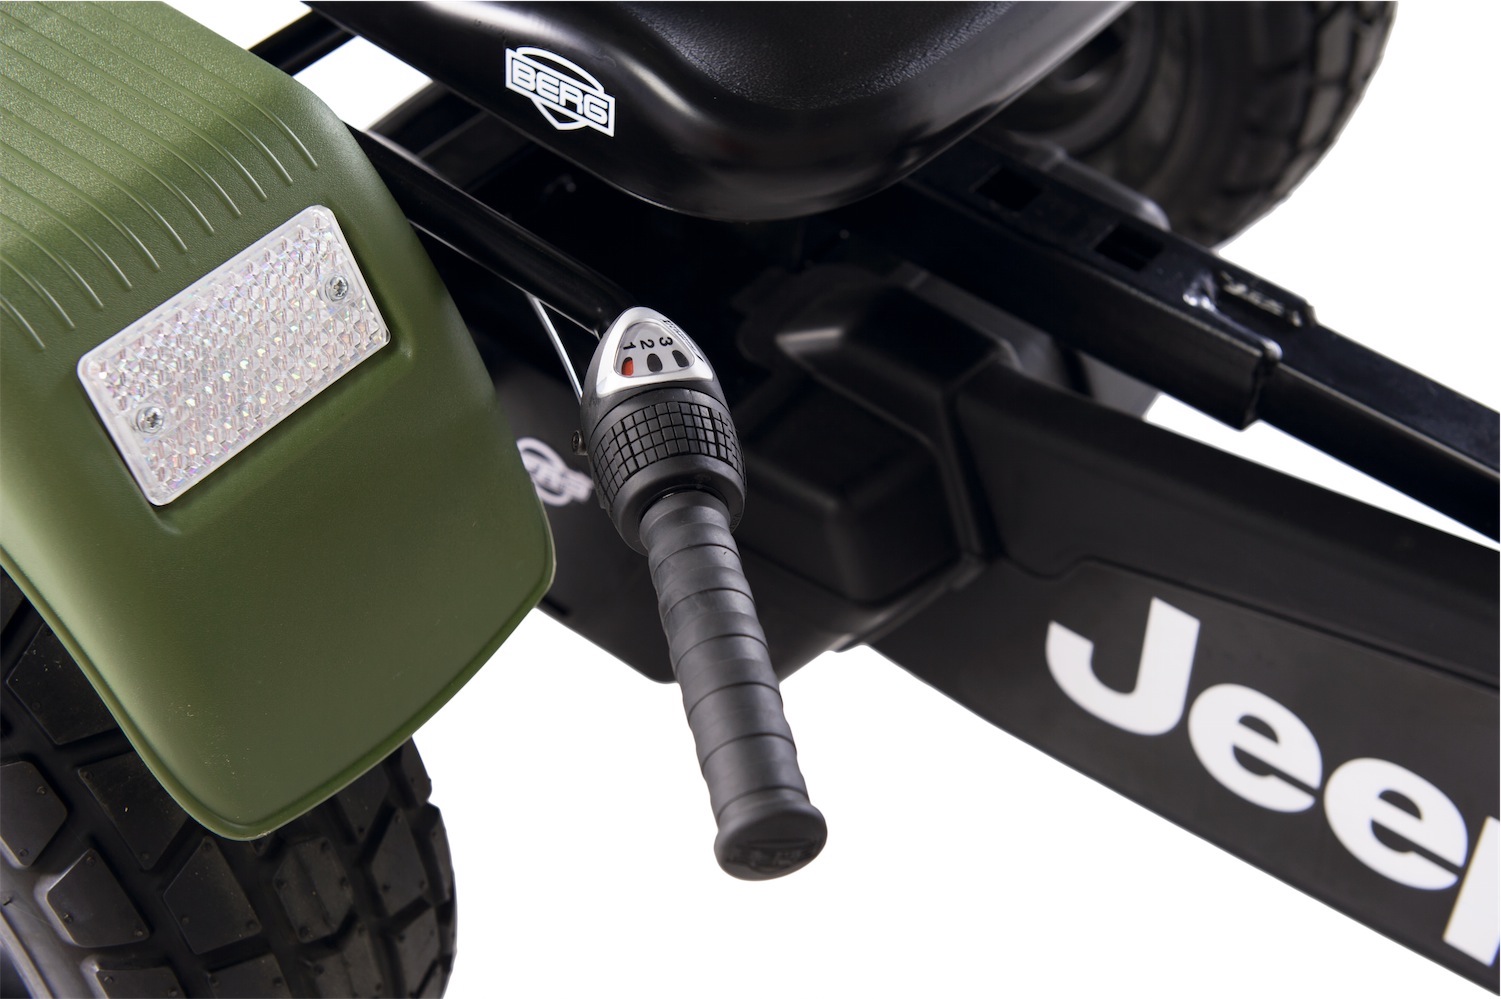 BERG Gokart Jeep® Revolution oliv/schwarz XXL E-BFR-3